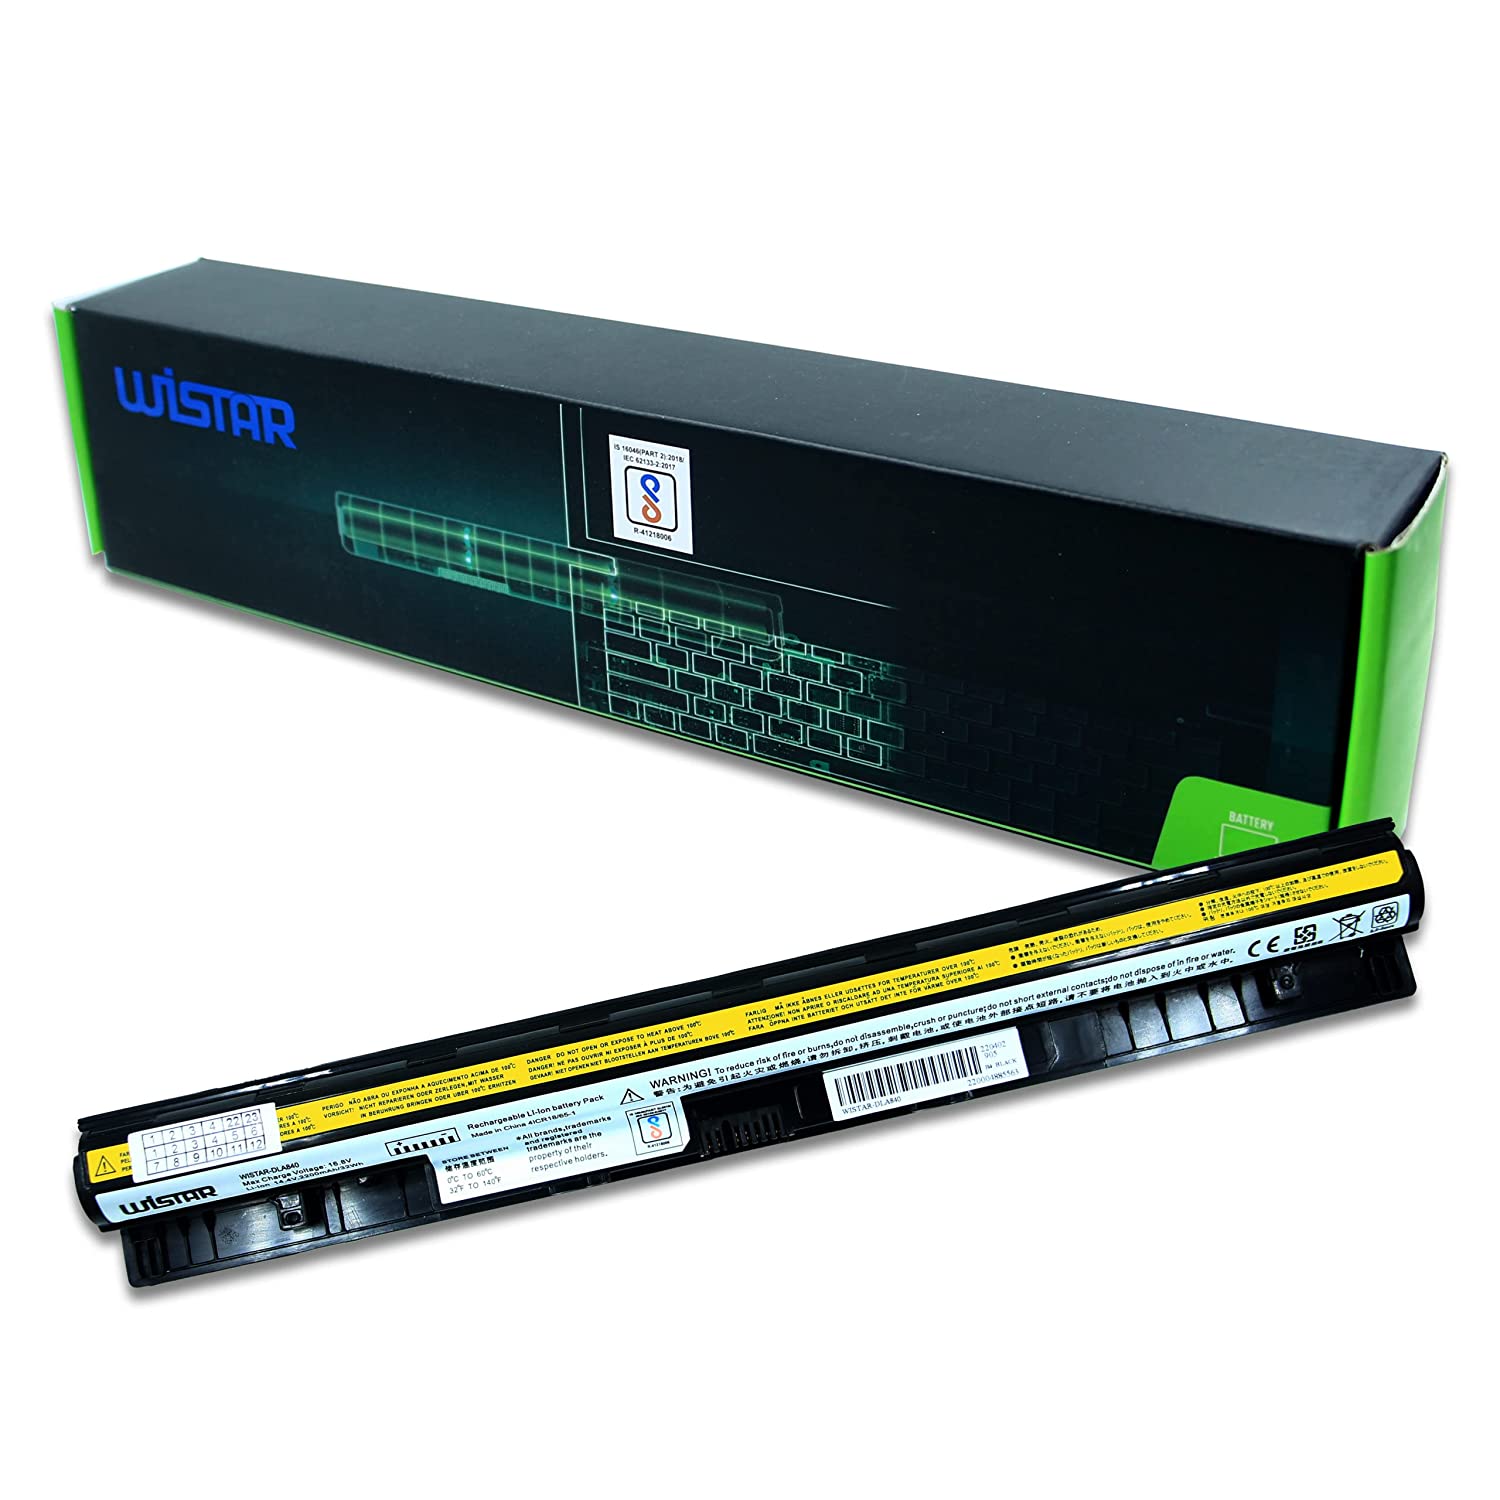 WISTAR Compatible Battery for Lenovo G50 Z50 Z40-70 Z50-70 Z40-75 G50-70 G50-70M G50-80 G50-30 G50-45 G400S G405S G410S G500S G510S S410P S510P Z710